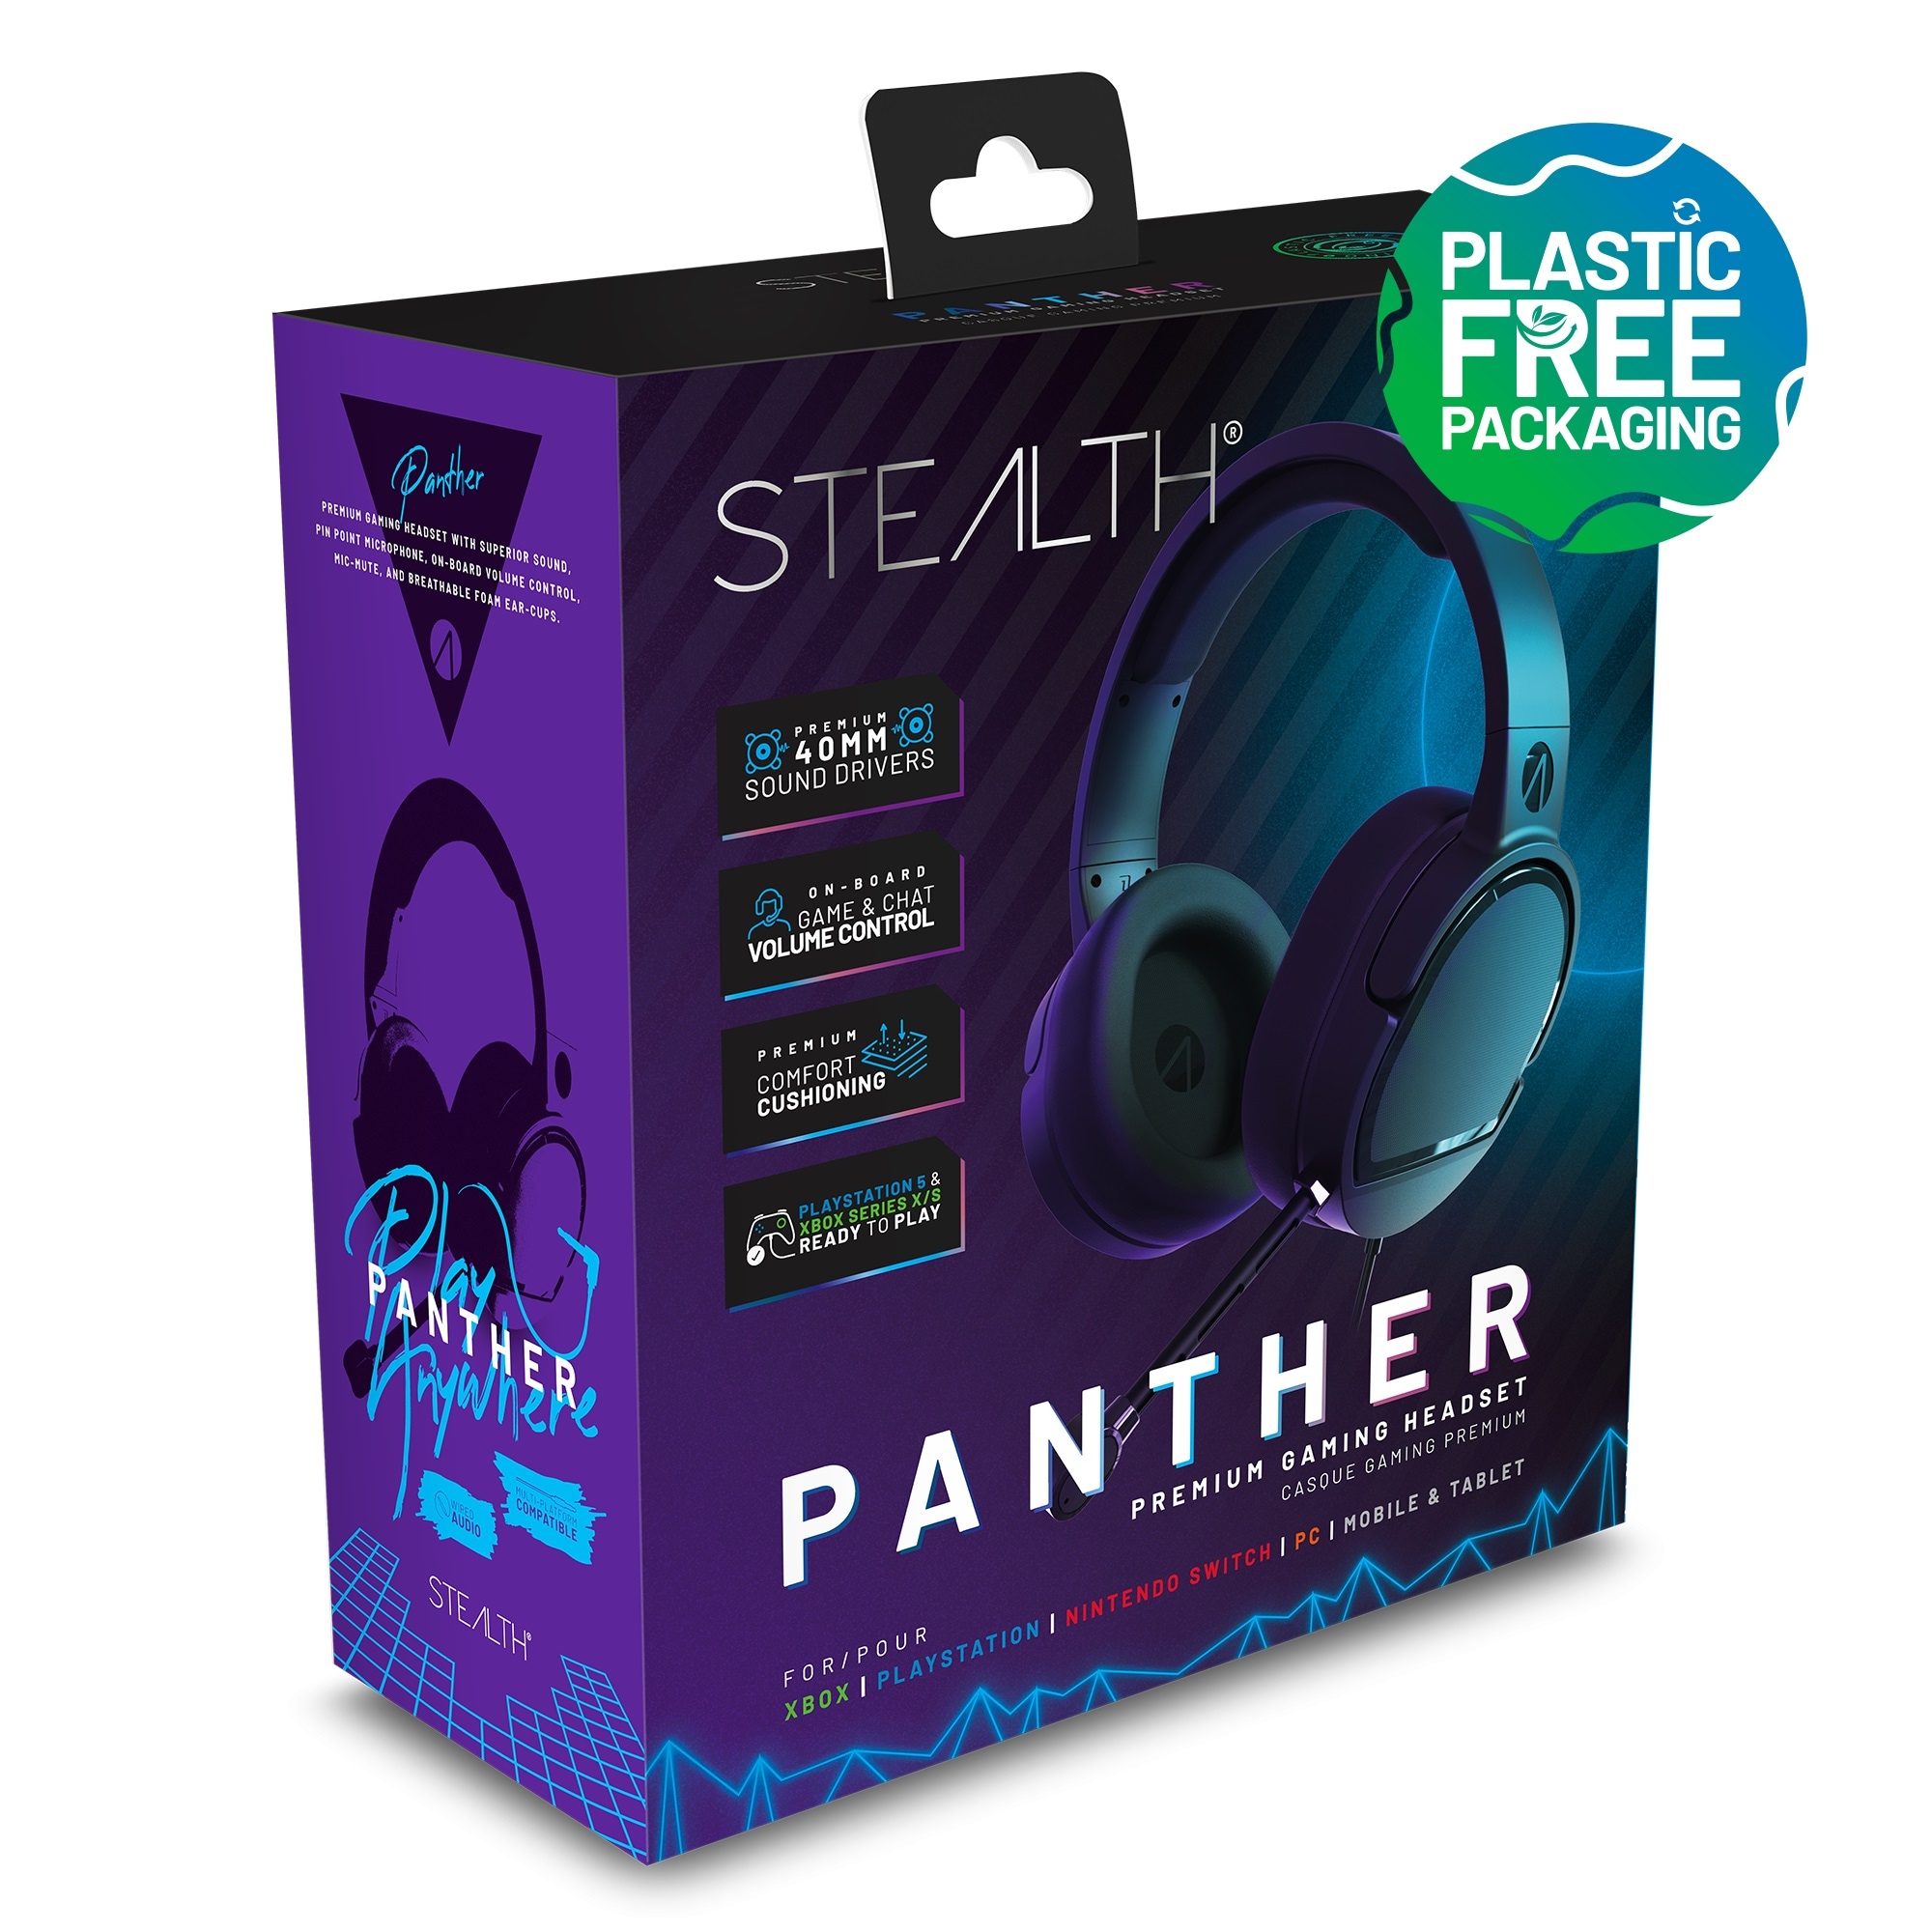 Stealth Gaming-Headset »Panther Gaming Headset«, Plastikfreie Verpackung